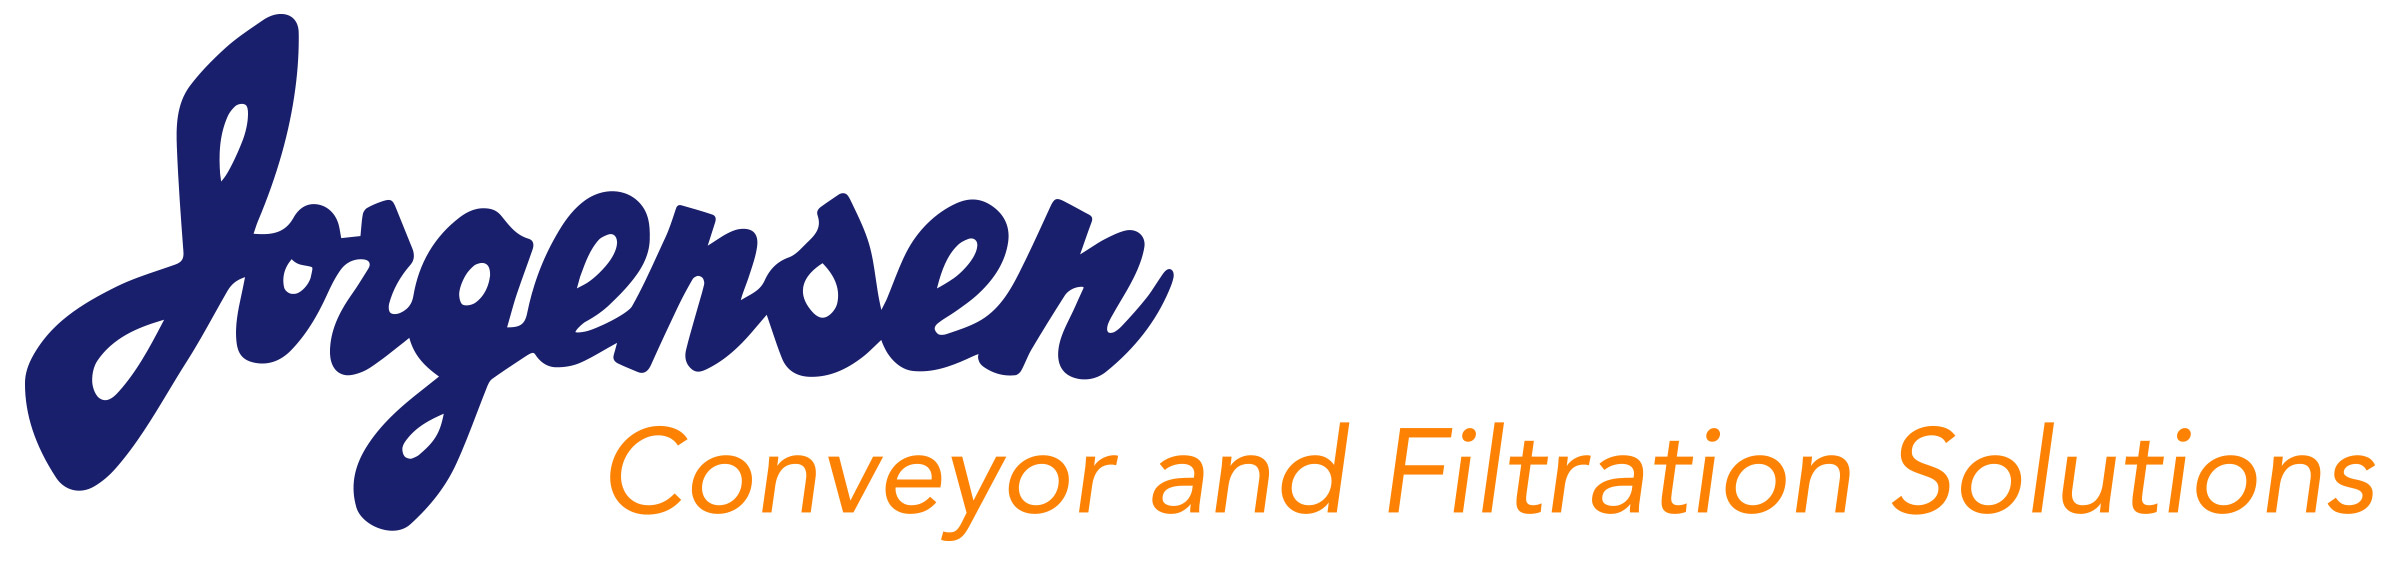 Jorgensen Conveyors, Inc. Company Logo